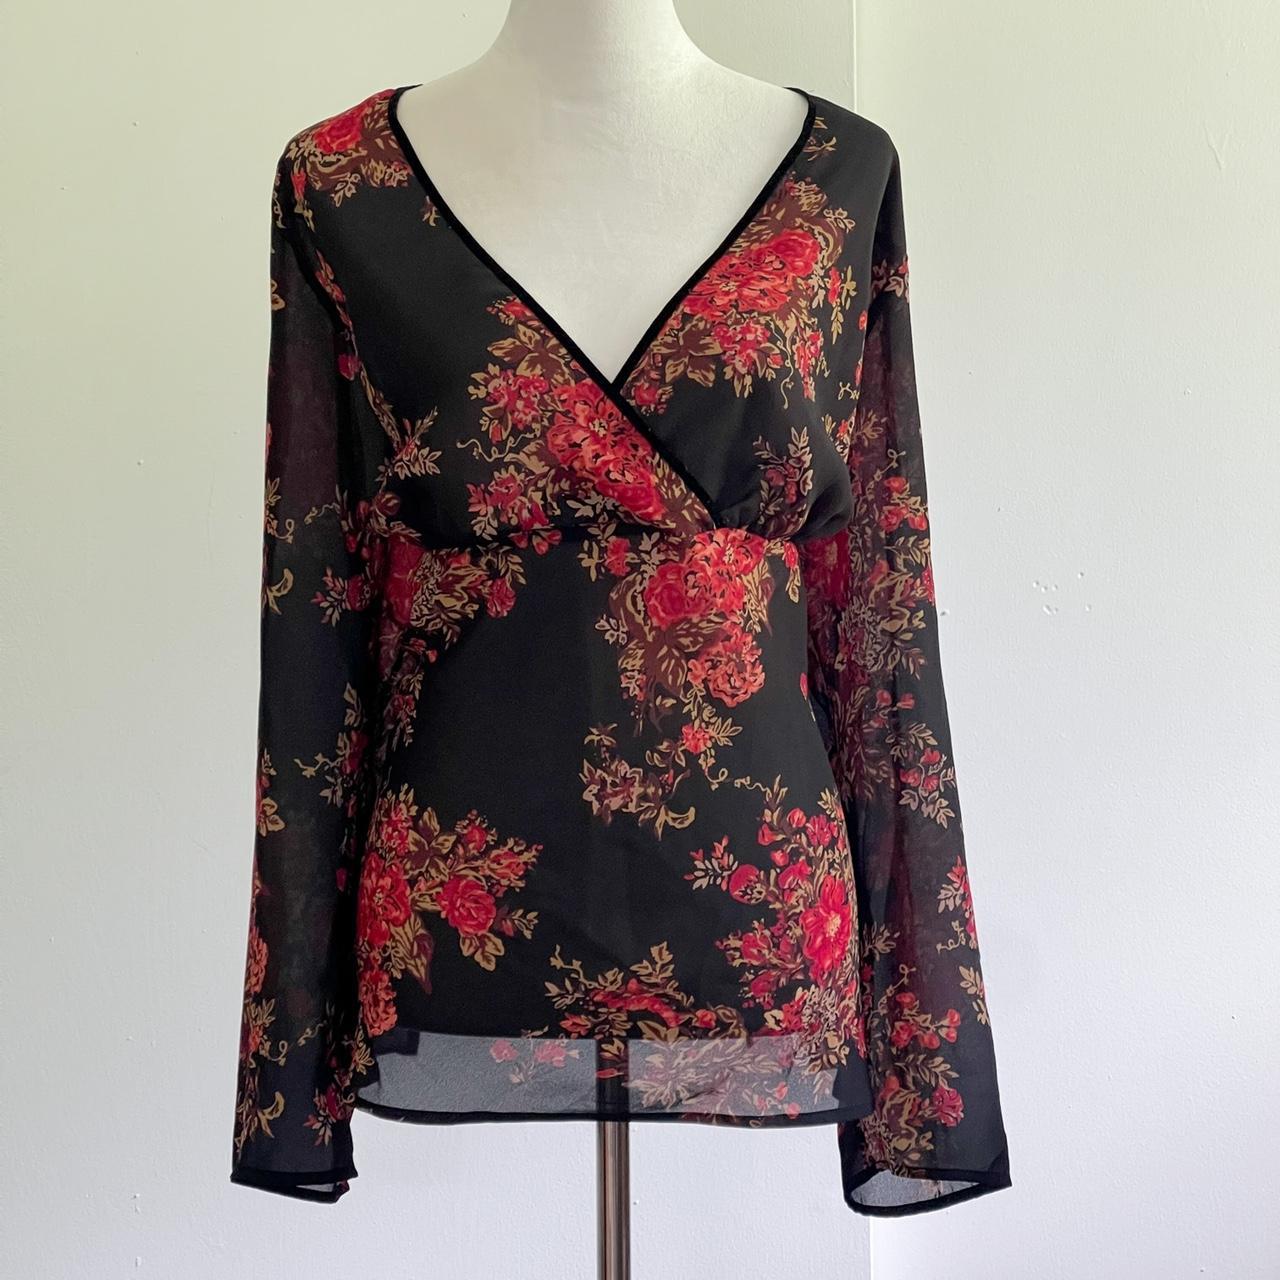 Vintage style sheer floral blouse by... - Depop